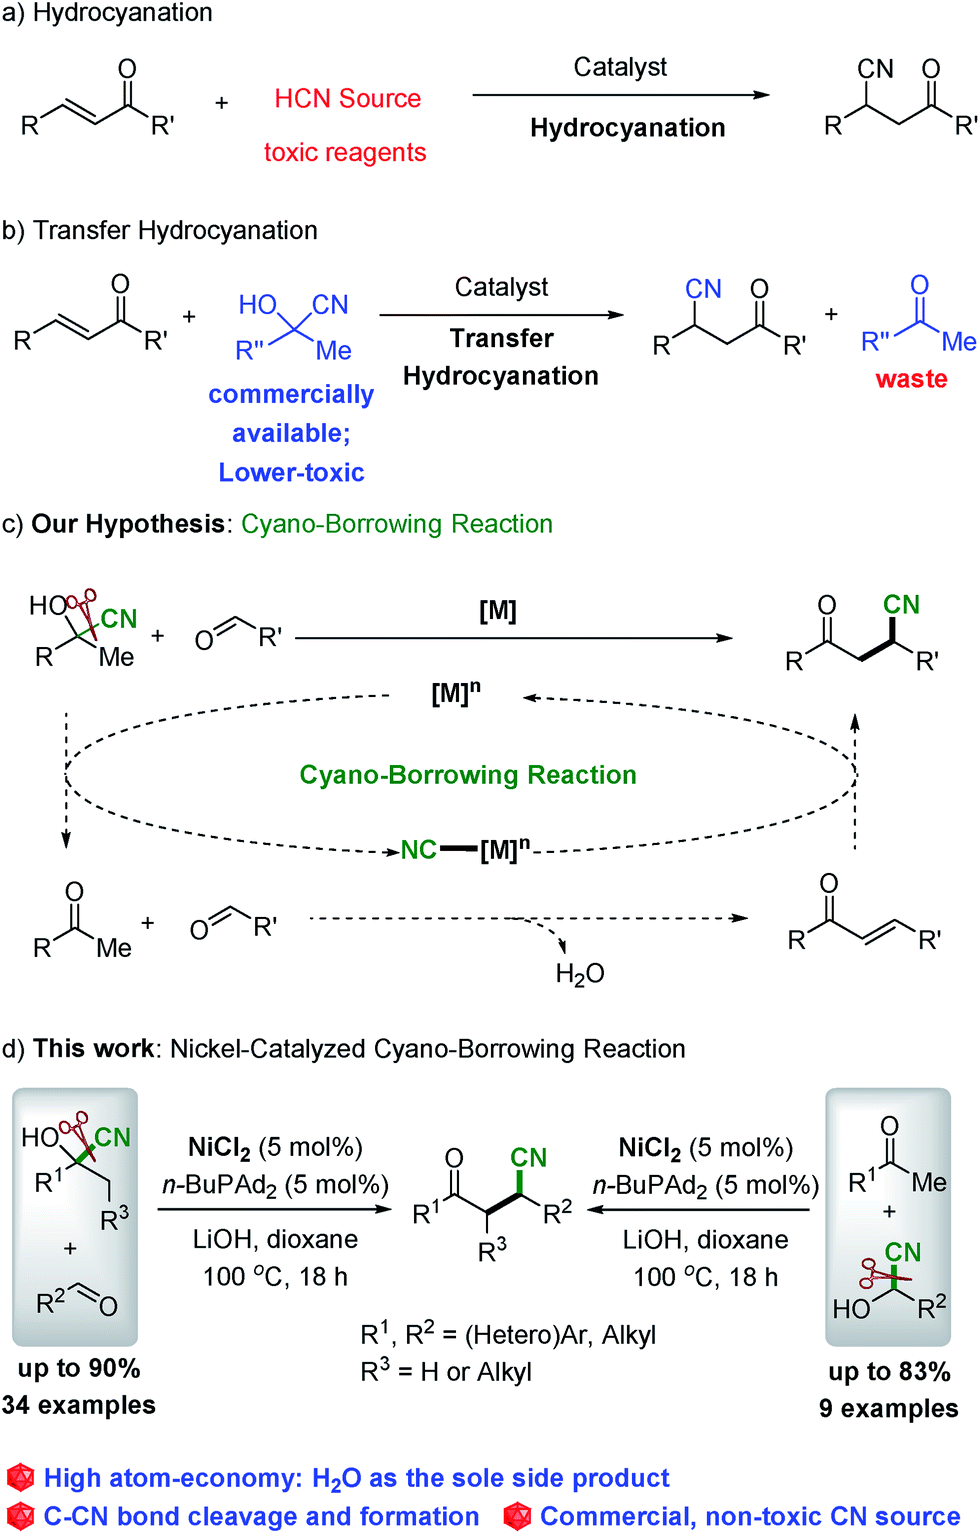 Cyano Borrowing Reaction Nickel Catalyzed Direct Conversion Of Cyanohydrins And Aldehydes Ketones To B Cyano Ketone Chemical Science Rsc Publishing Doi 10 1039 C9sck